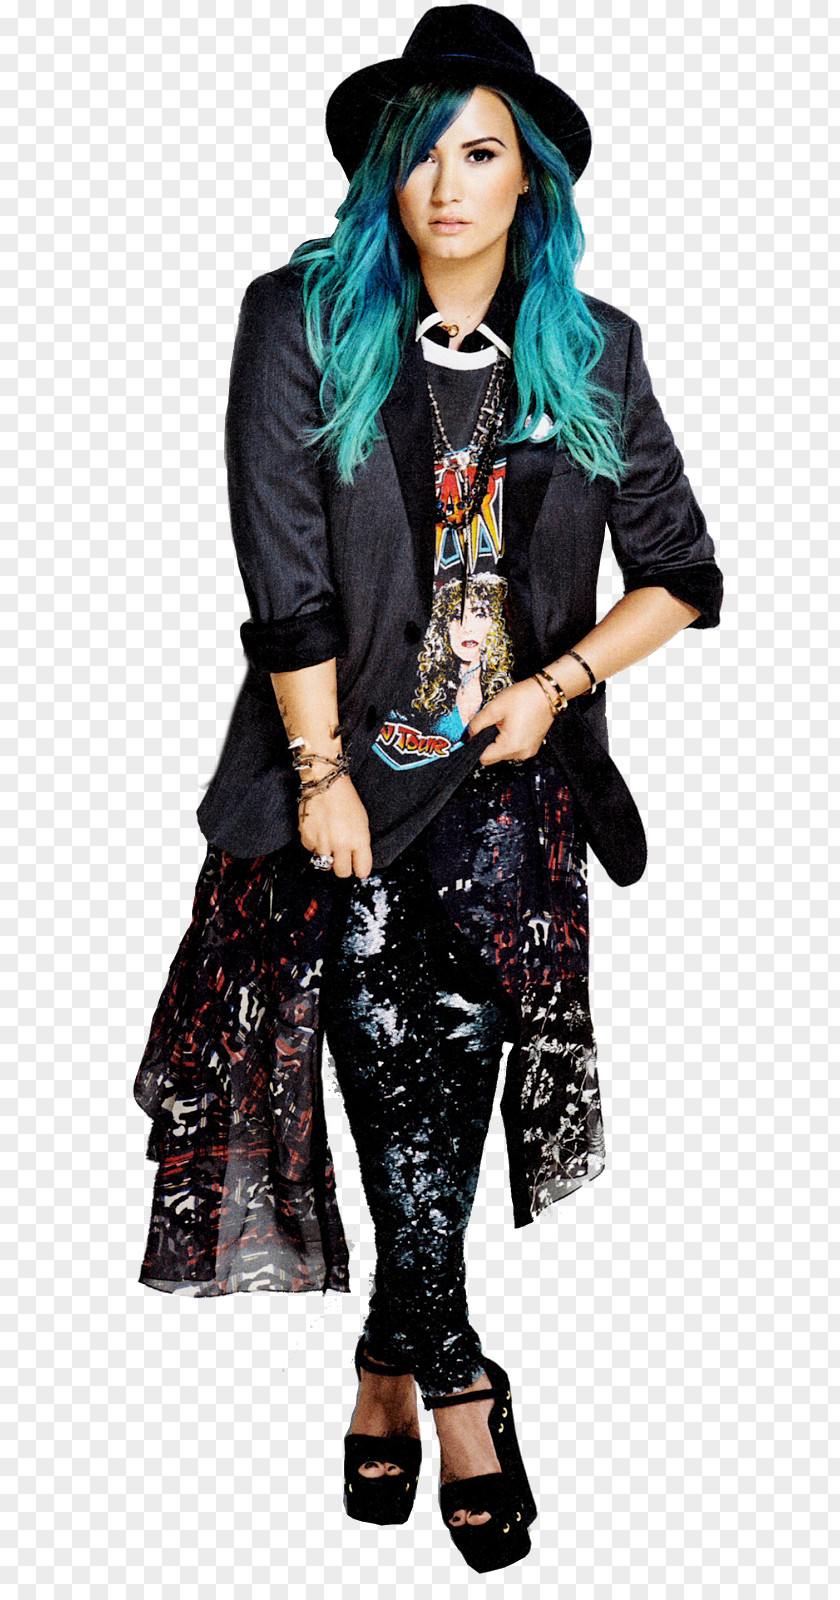 Blue Hair Demi Lovato Smurfette The X Factor (U.S.) Nylon PNG